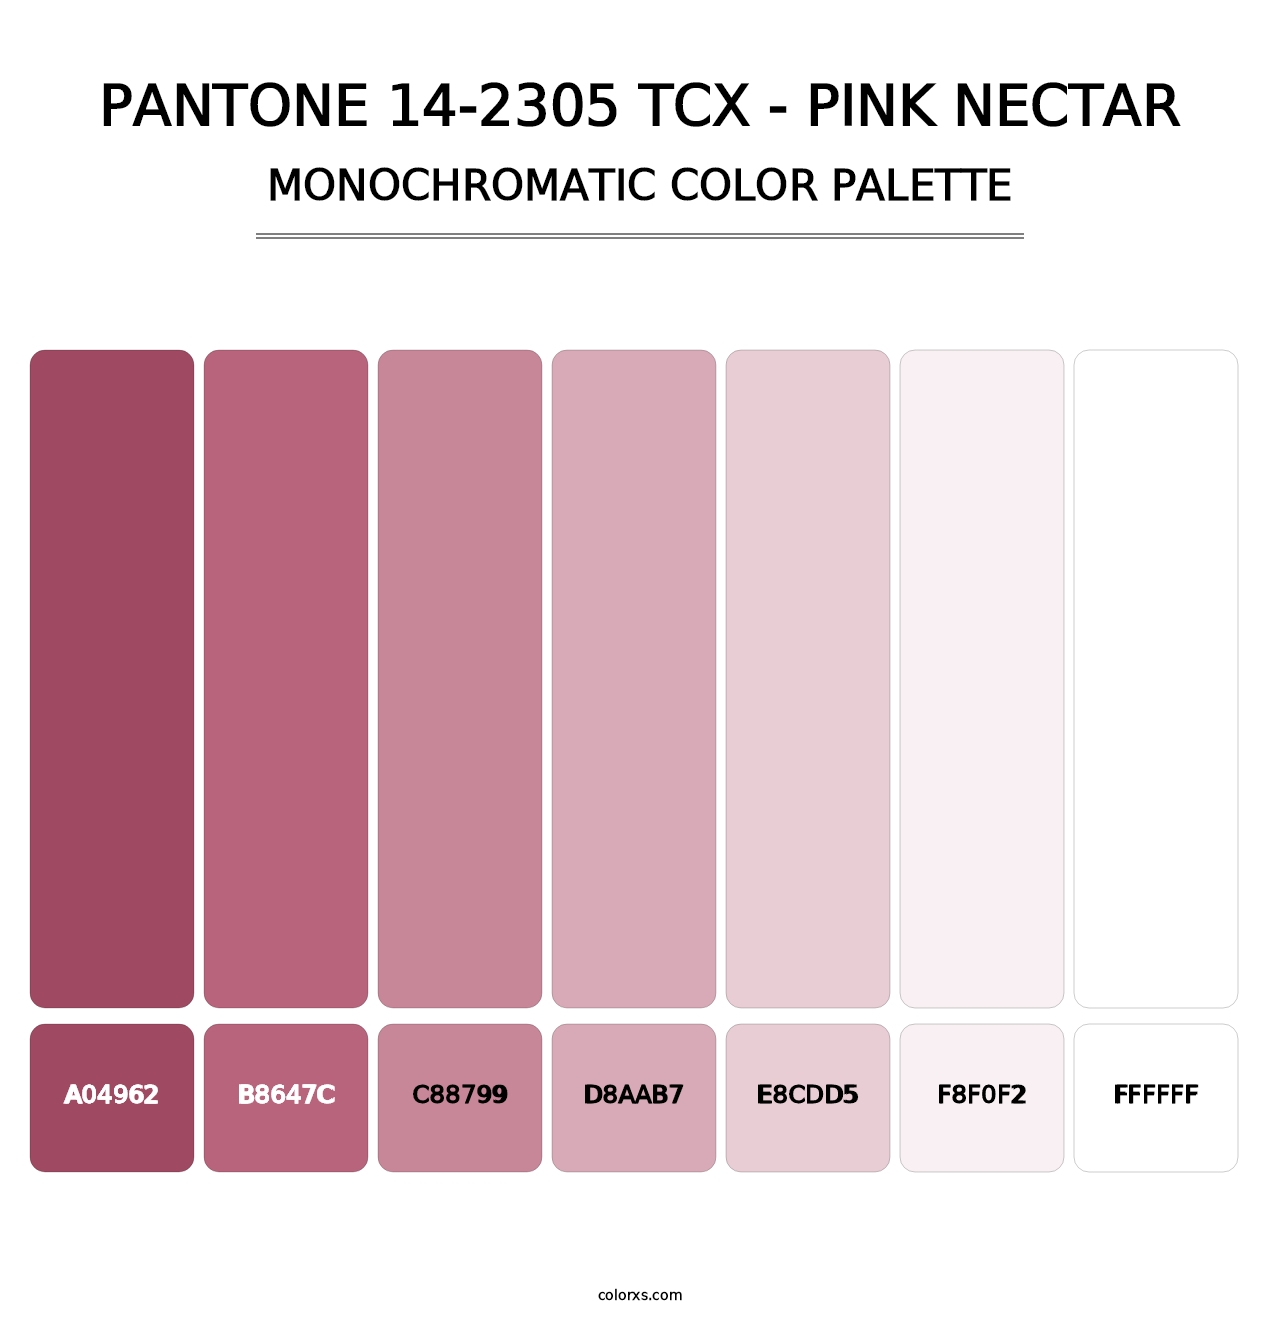 PANTONE 14-2305 TCX - Pink Nectar - Monochromatic Color Palette